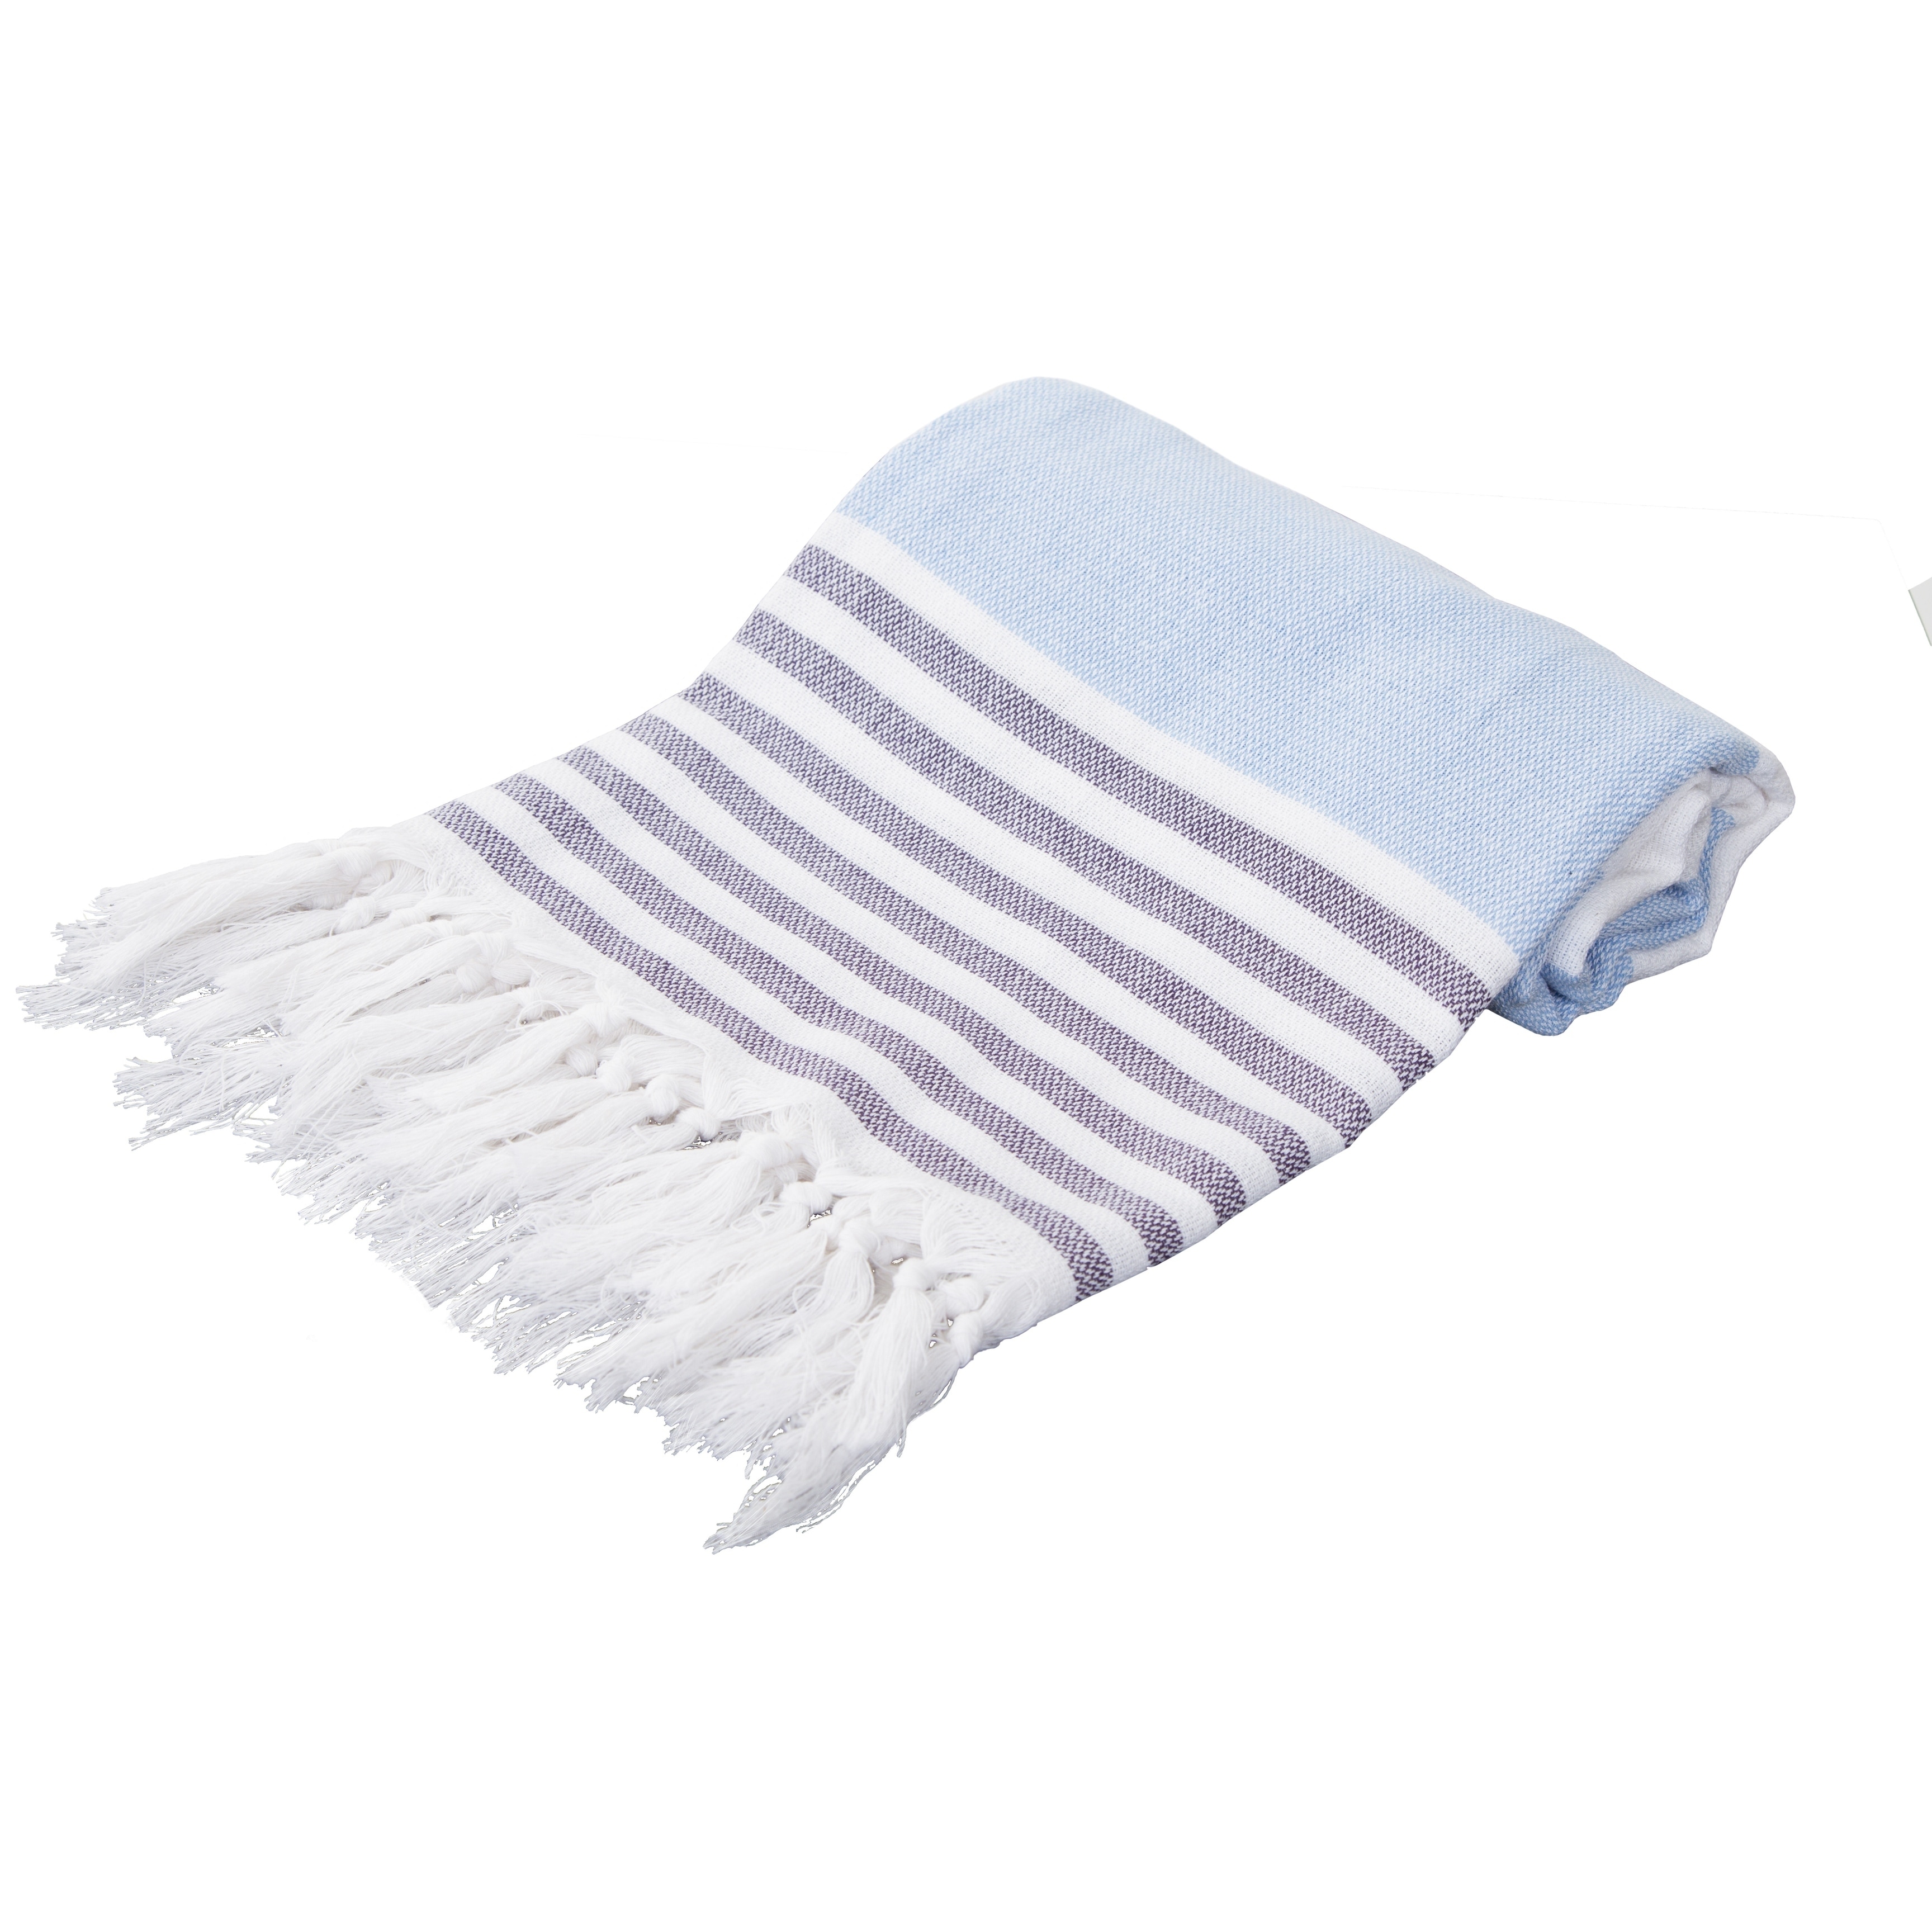 LayDay Starla Turkish Cotton Beach Towel 